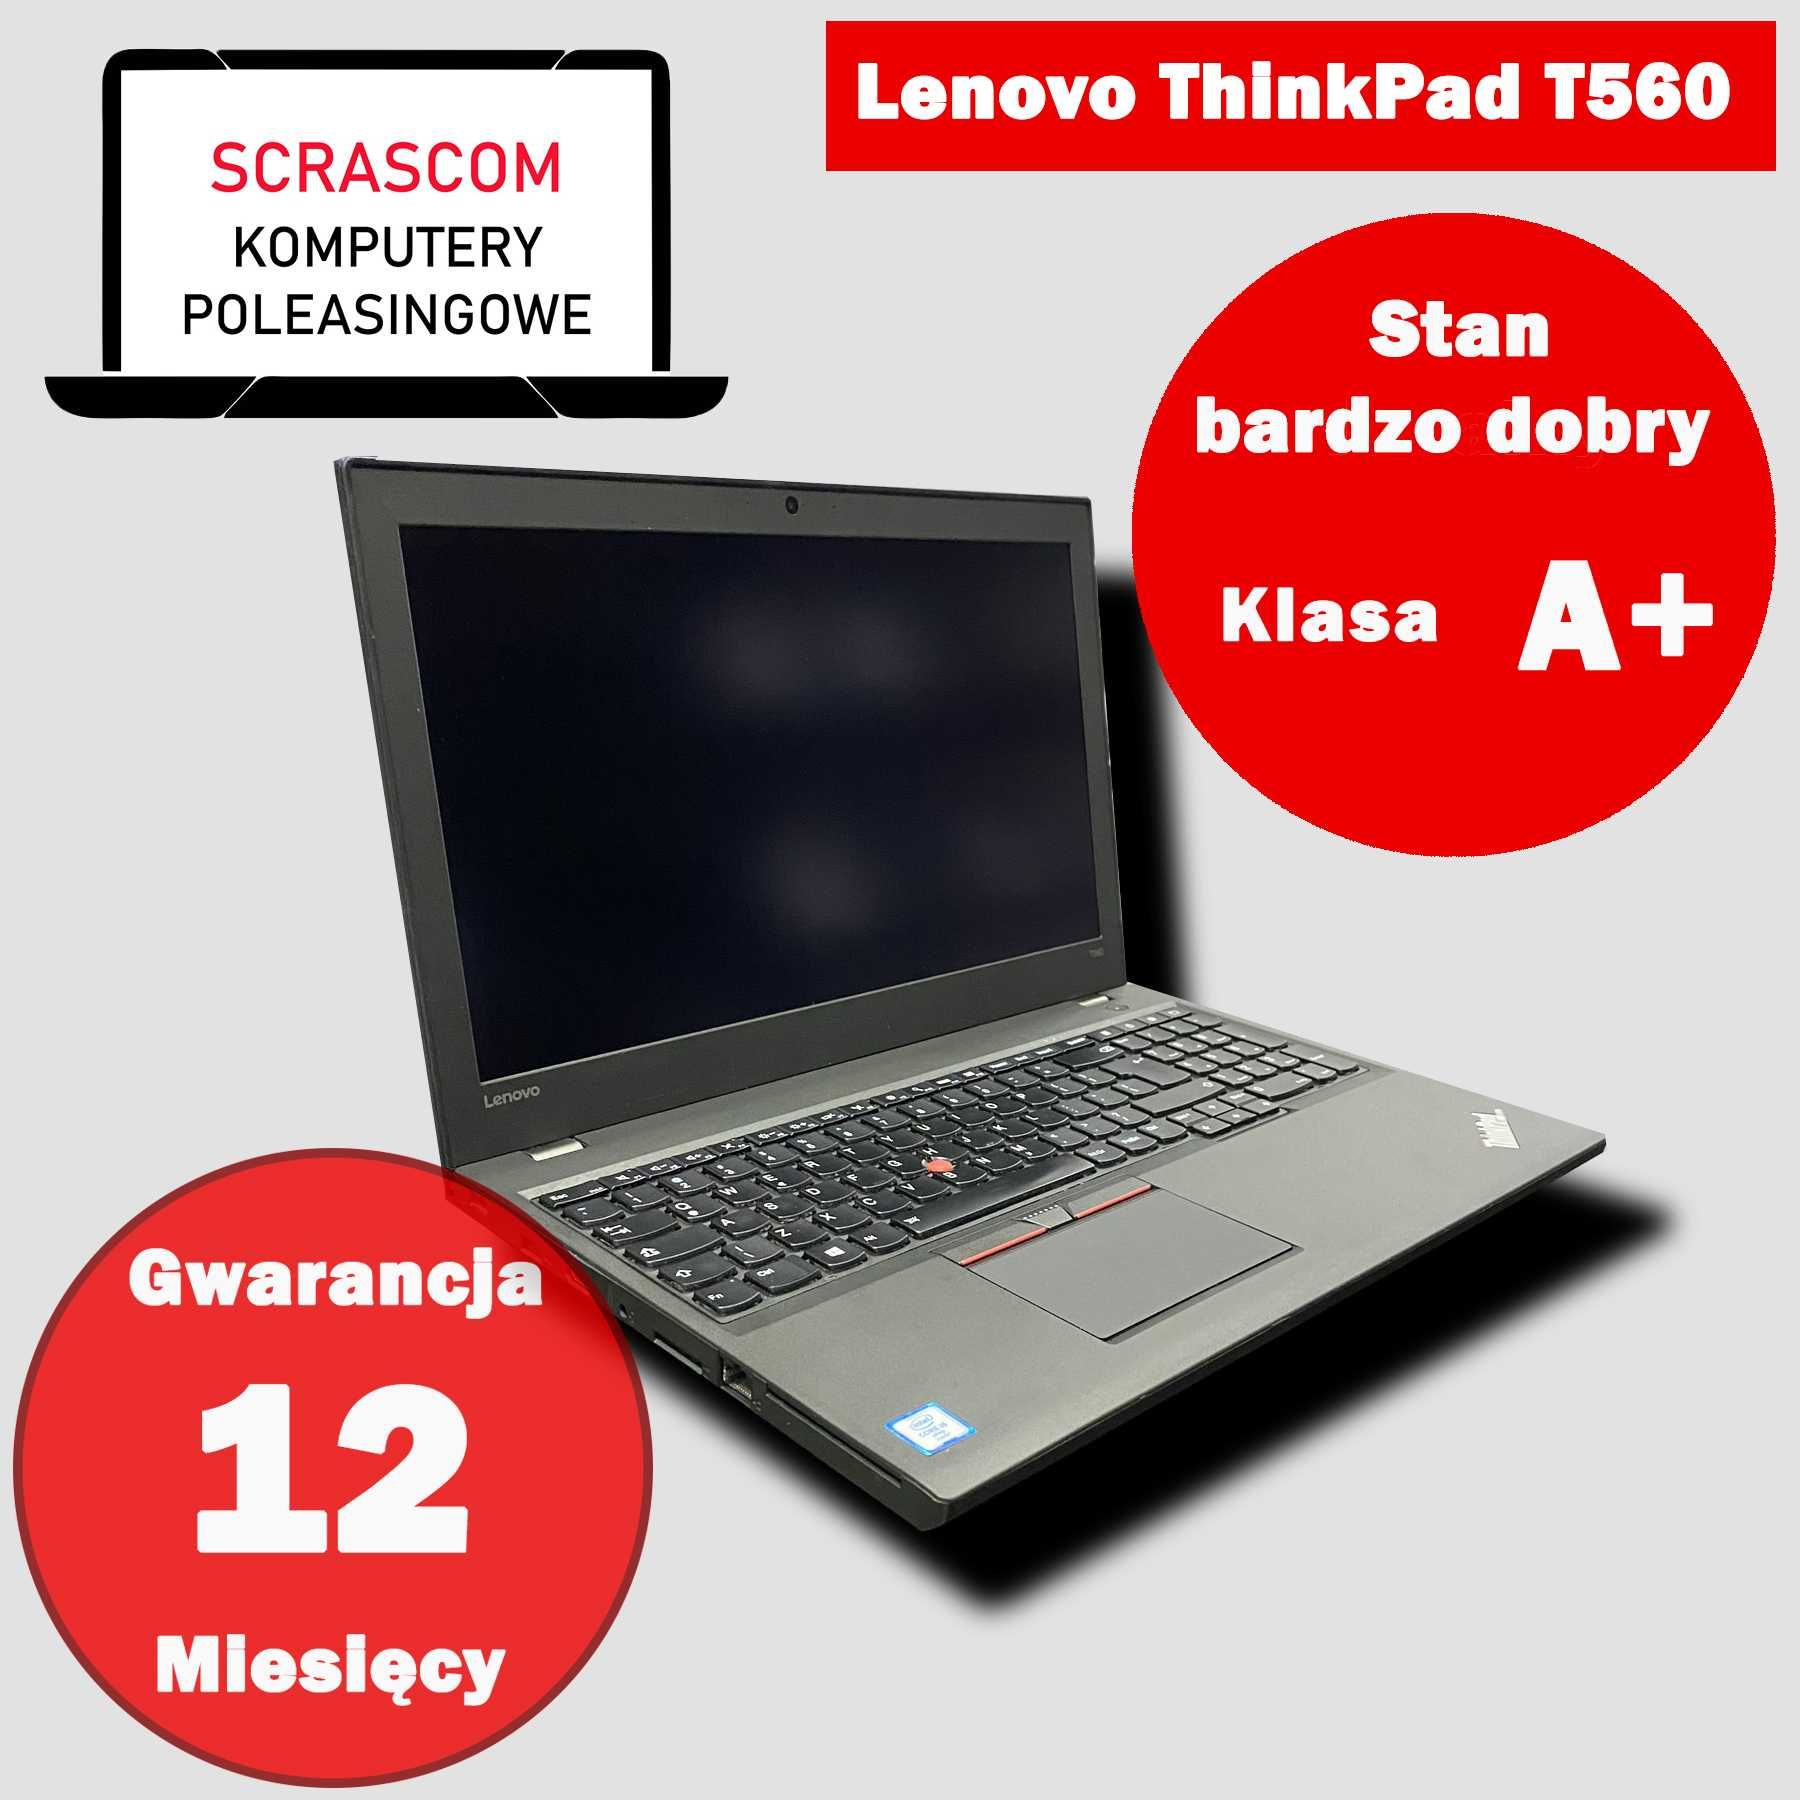 Laptop Lenovo ThinkPad T560 i5 16GB 512GB SSD Windows 10 GWAR 12msc